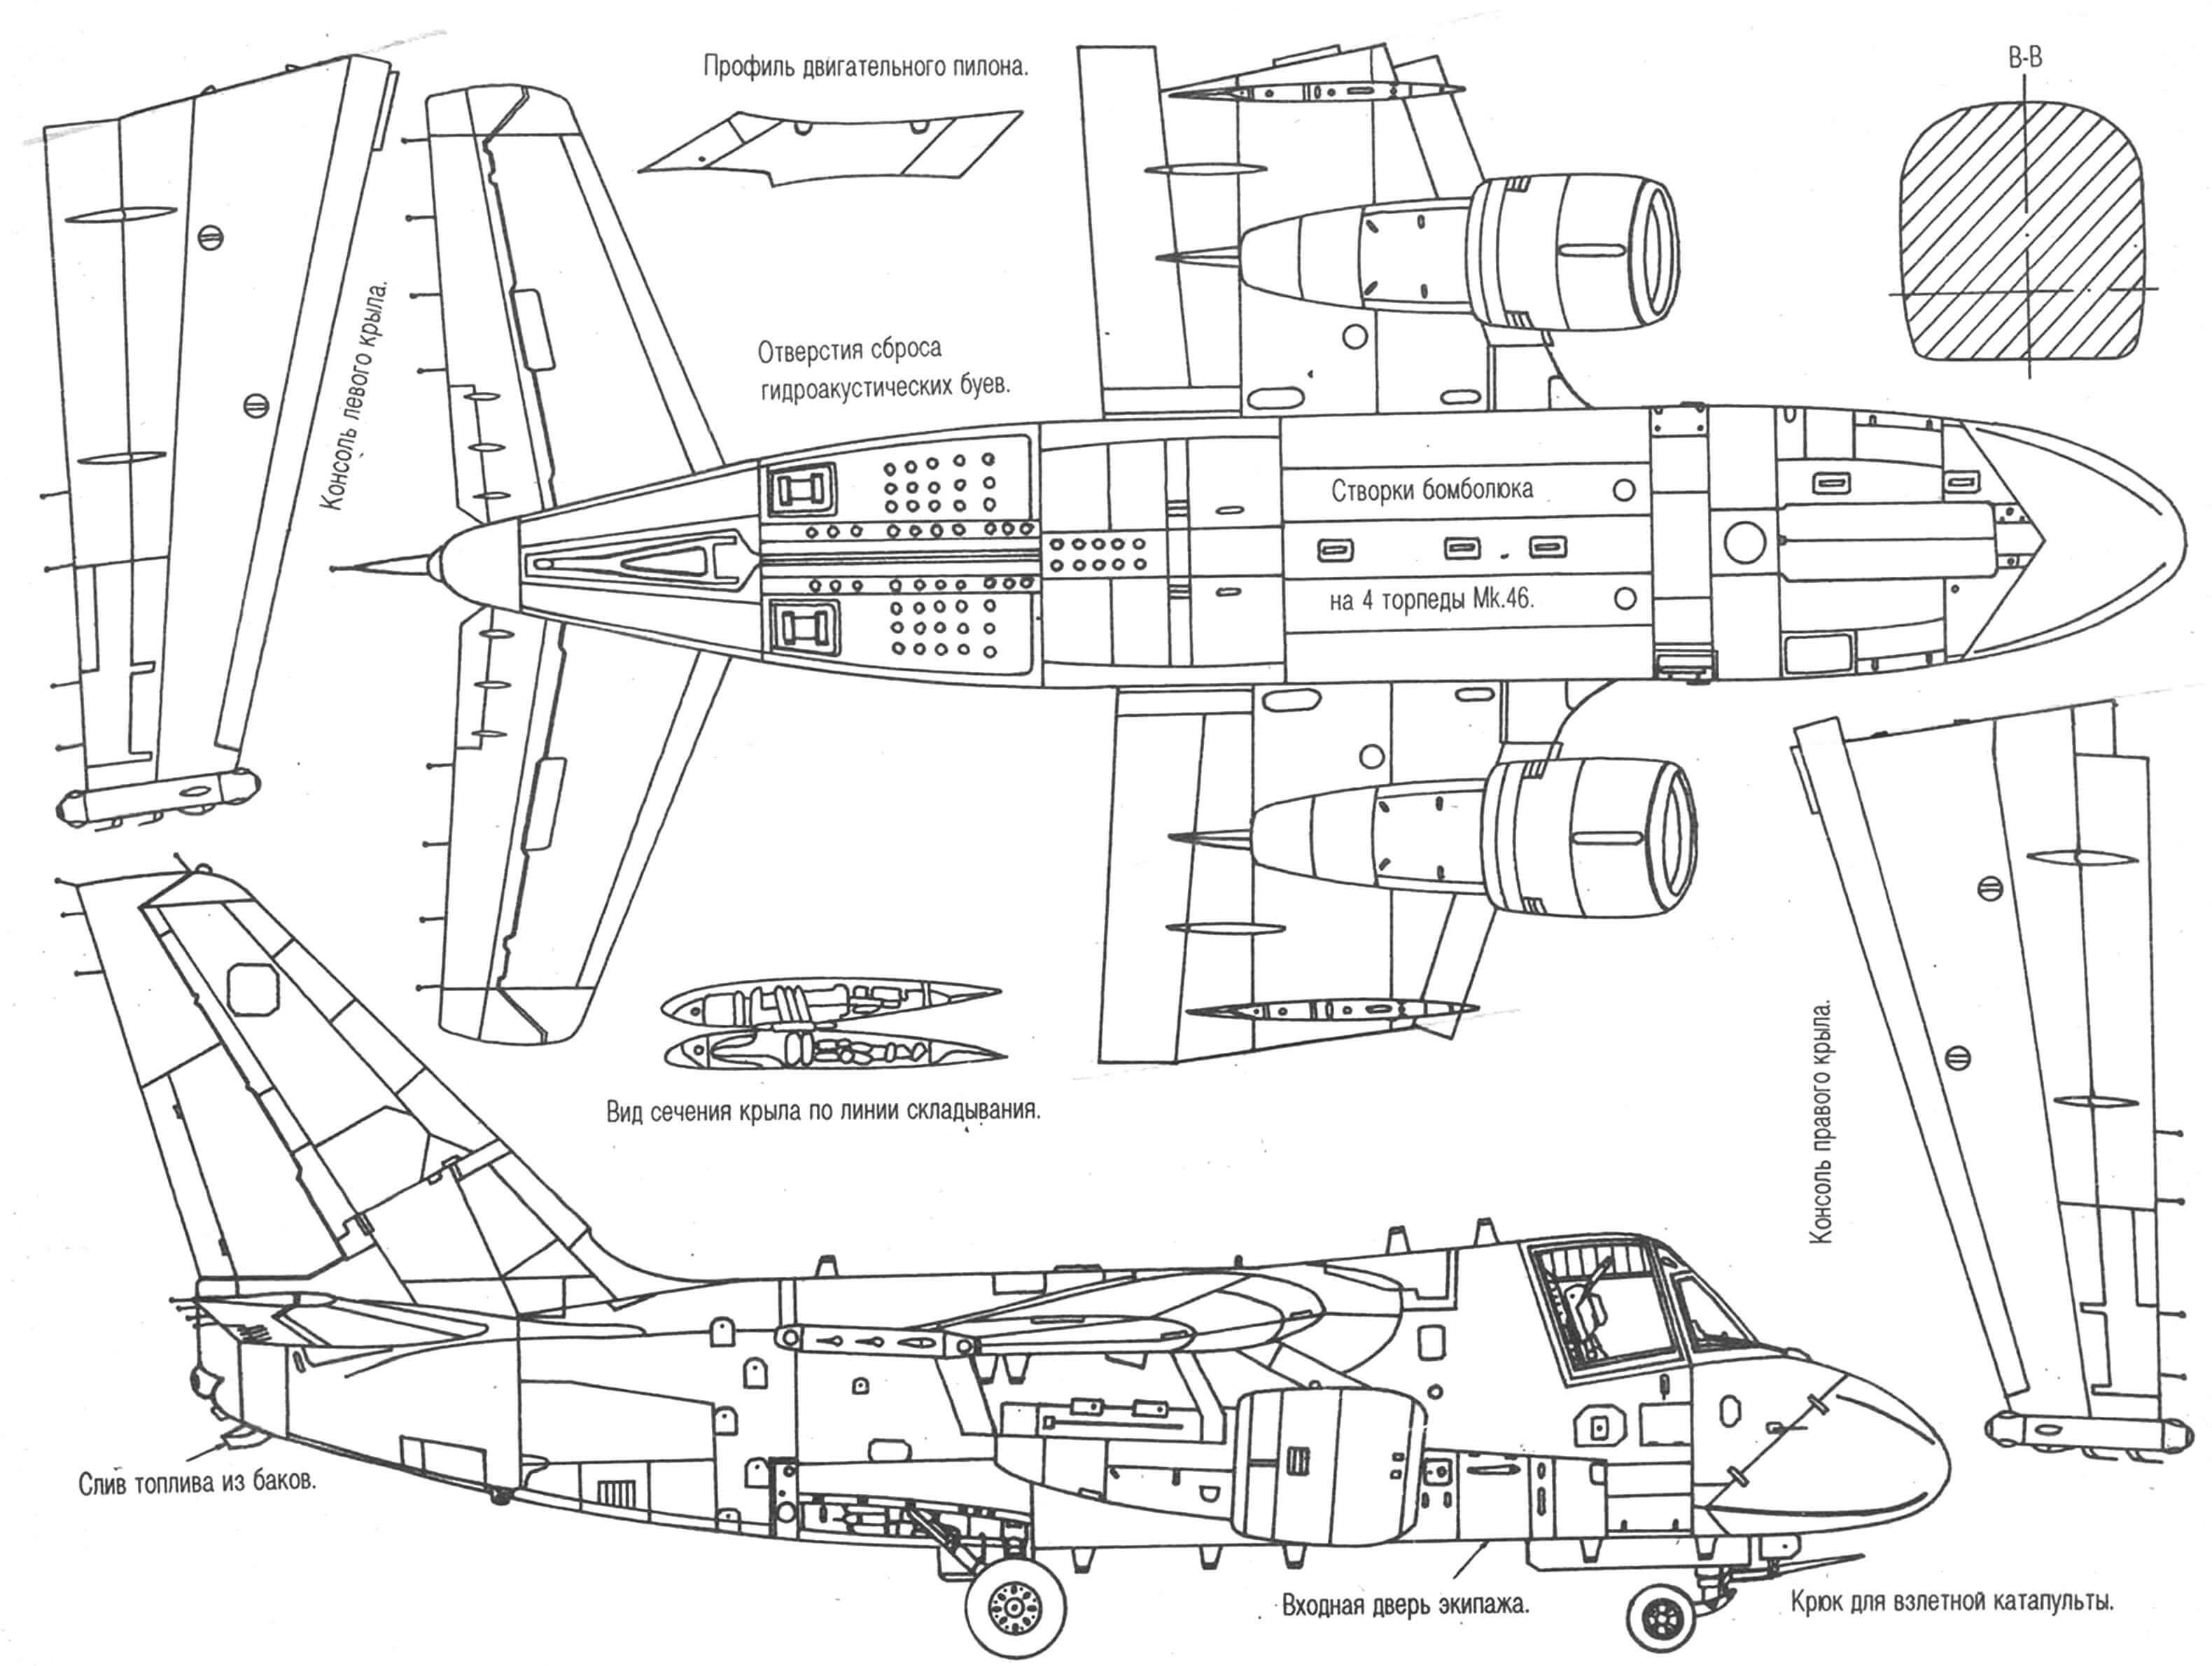 Lockheed S-За Viking